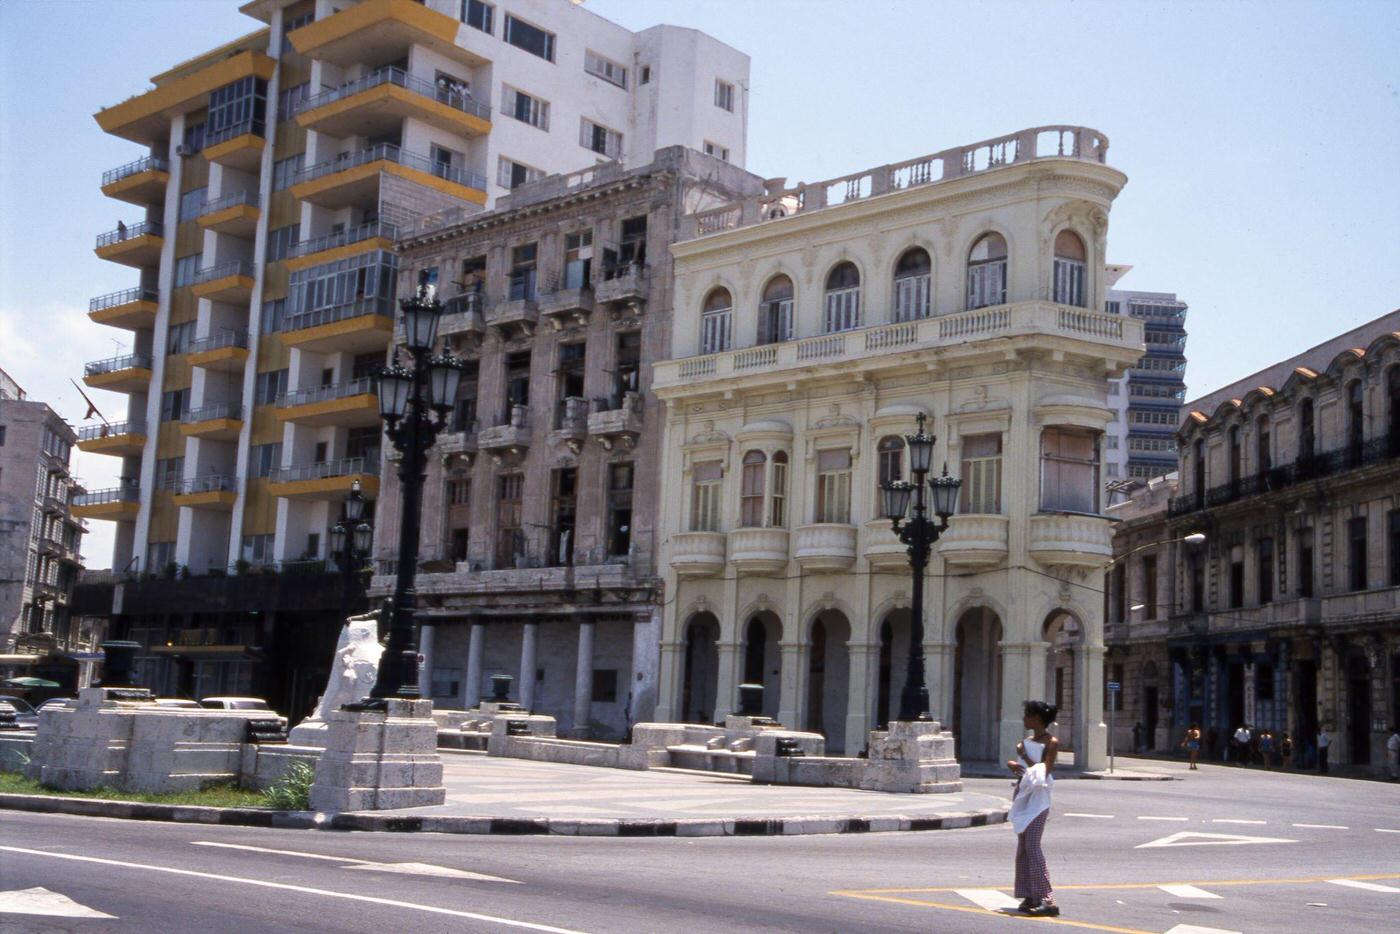 Buildings in Havana, Cuba, June 1999